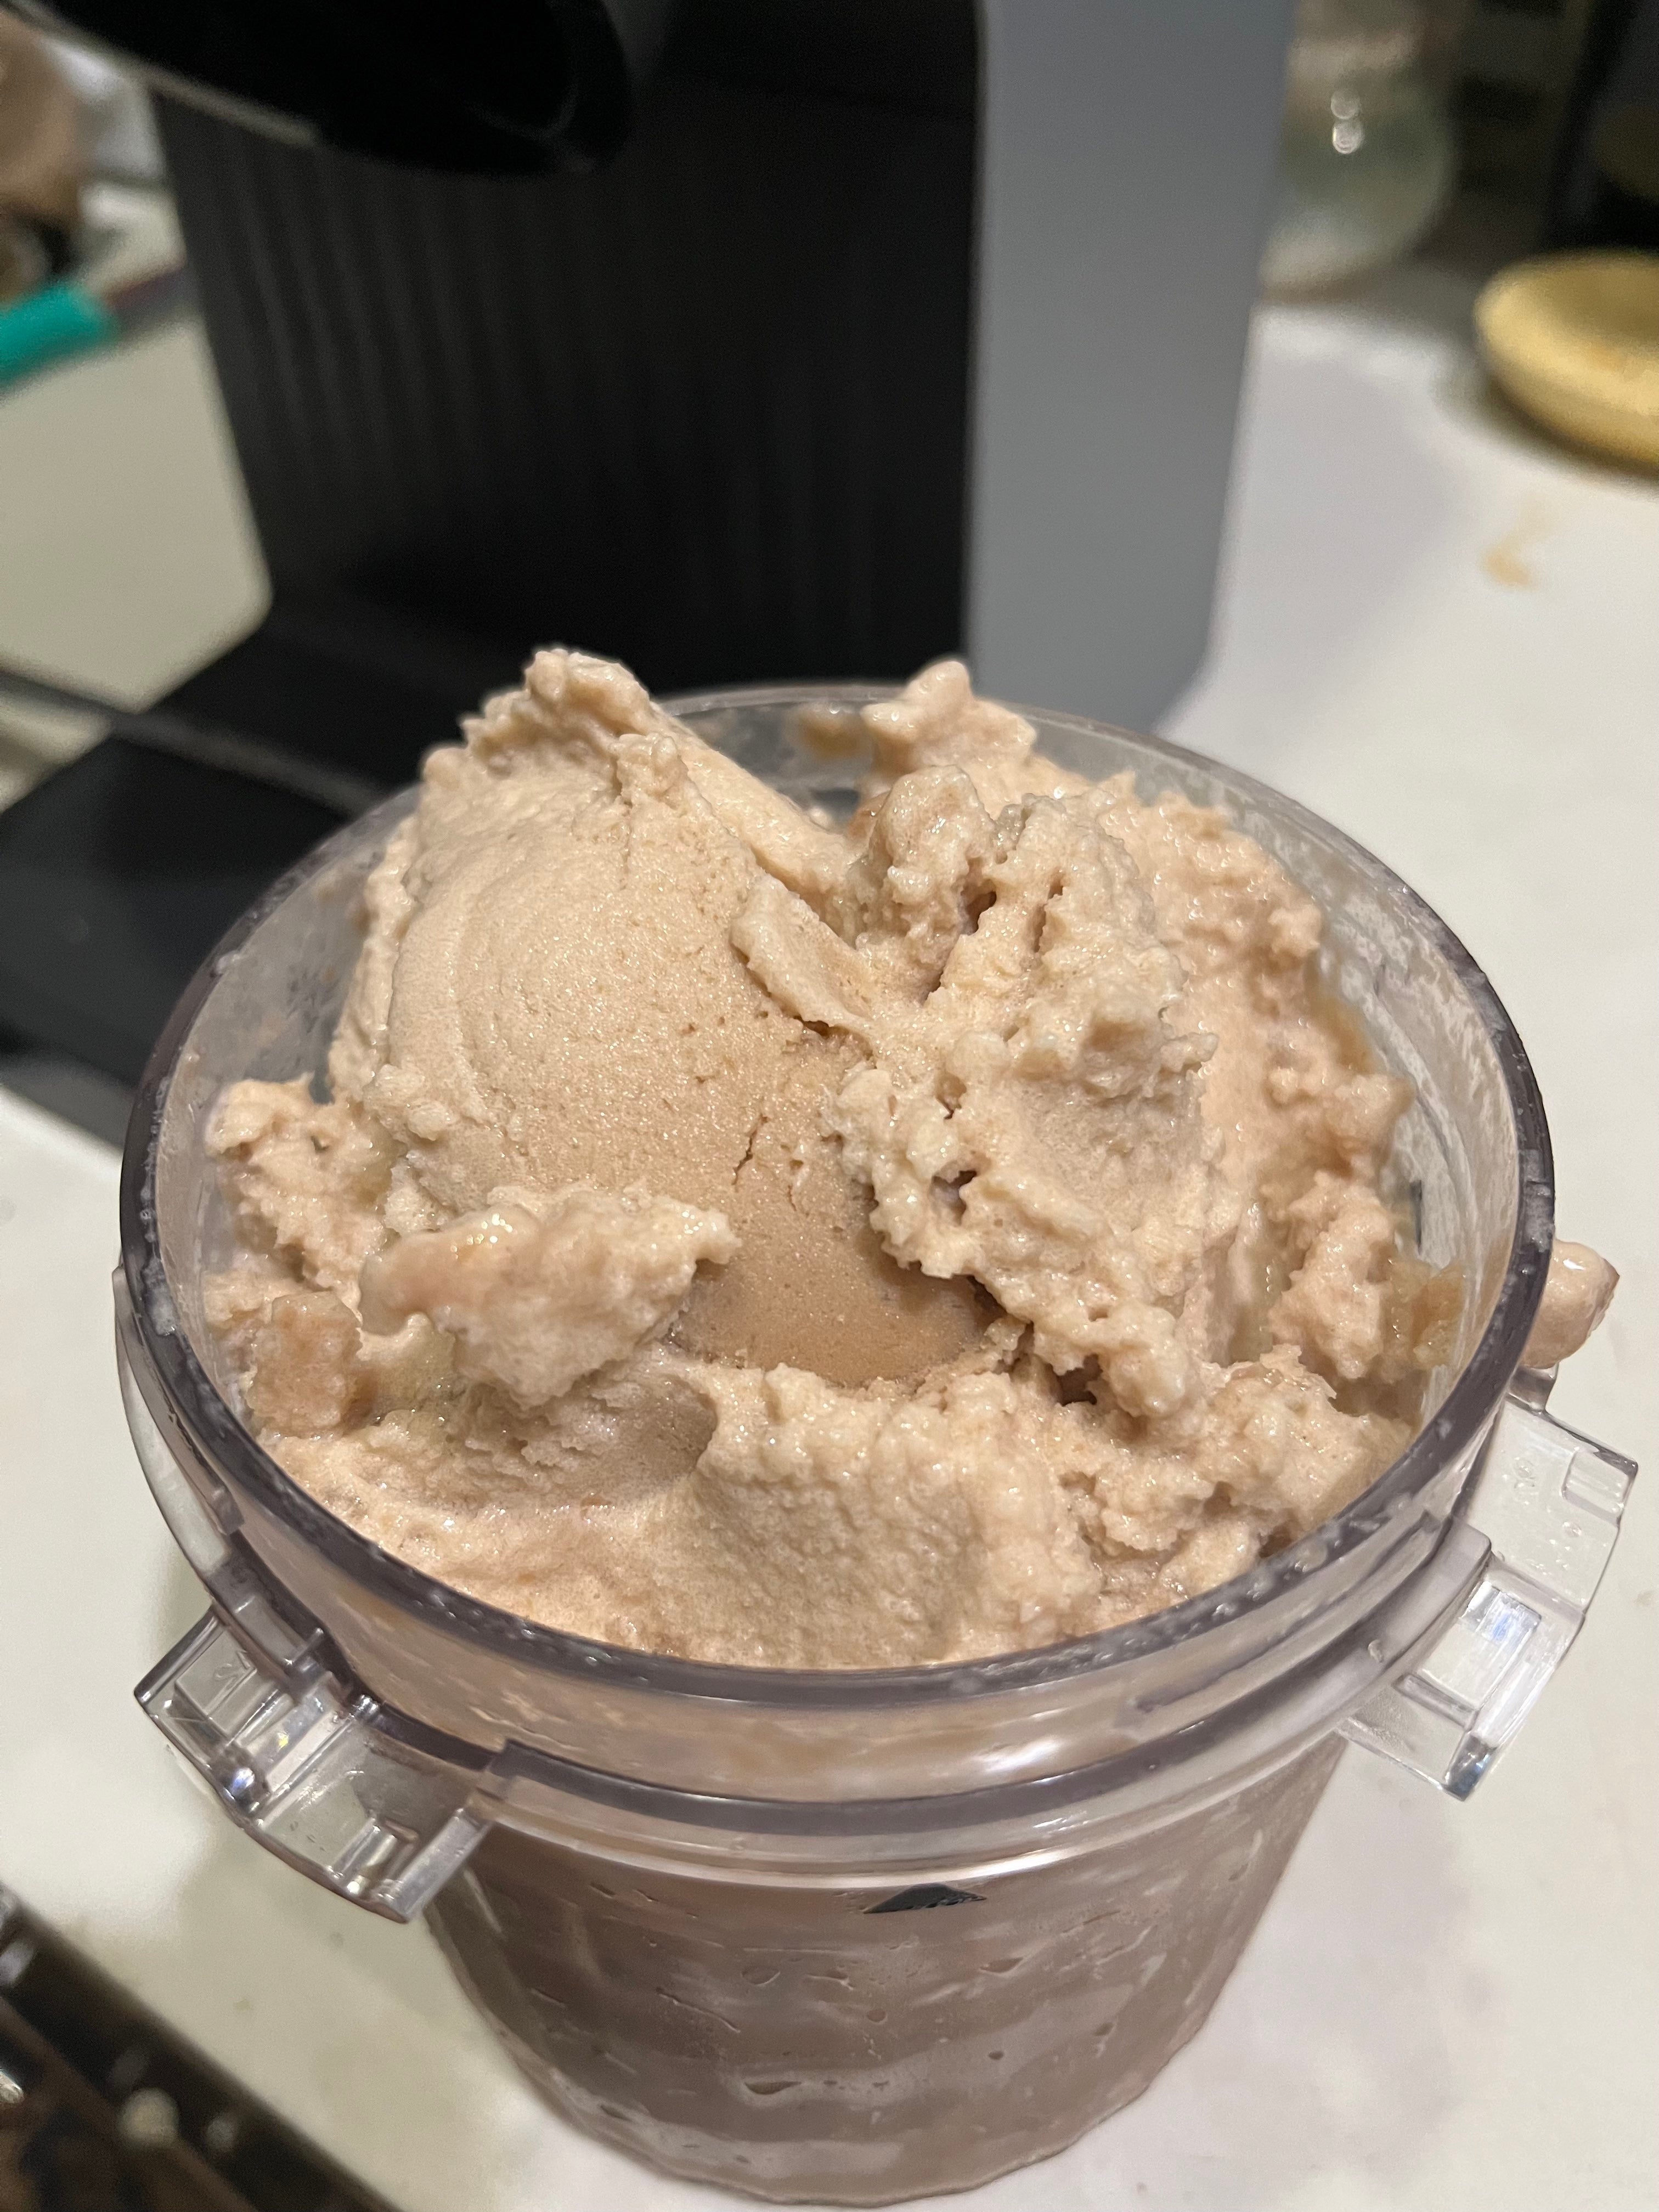 Ninja Creami Review: Ice cream maker extraordinaire - Reviewed